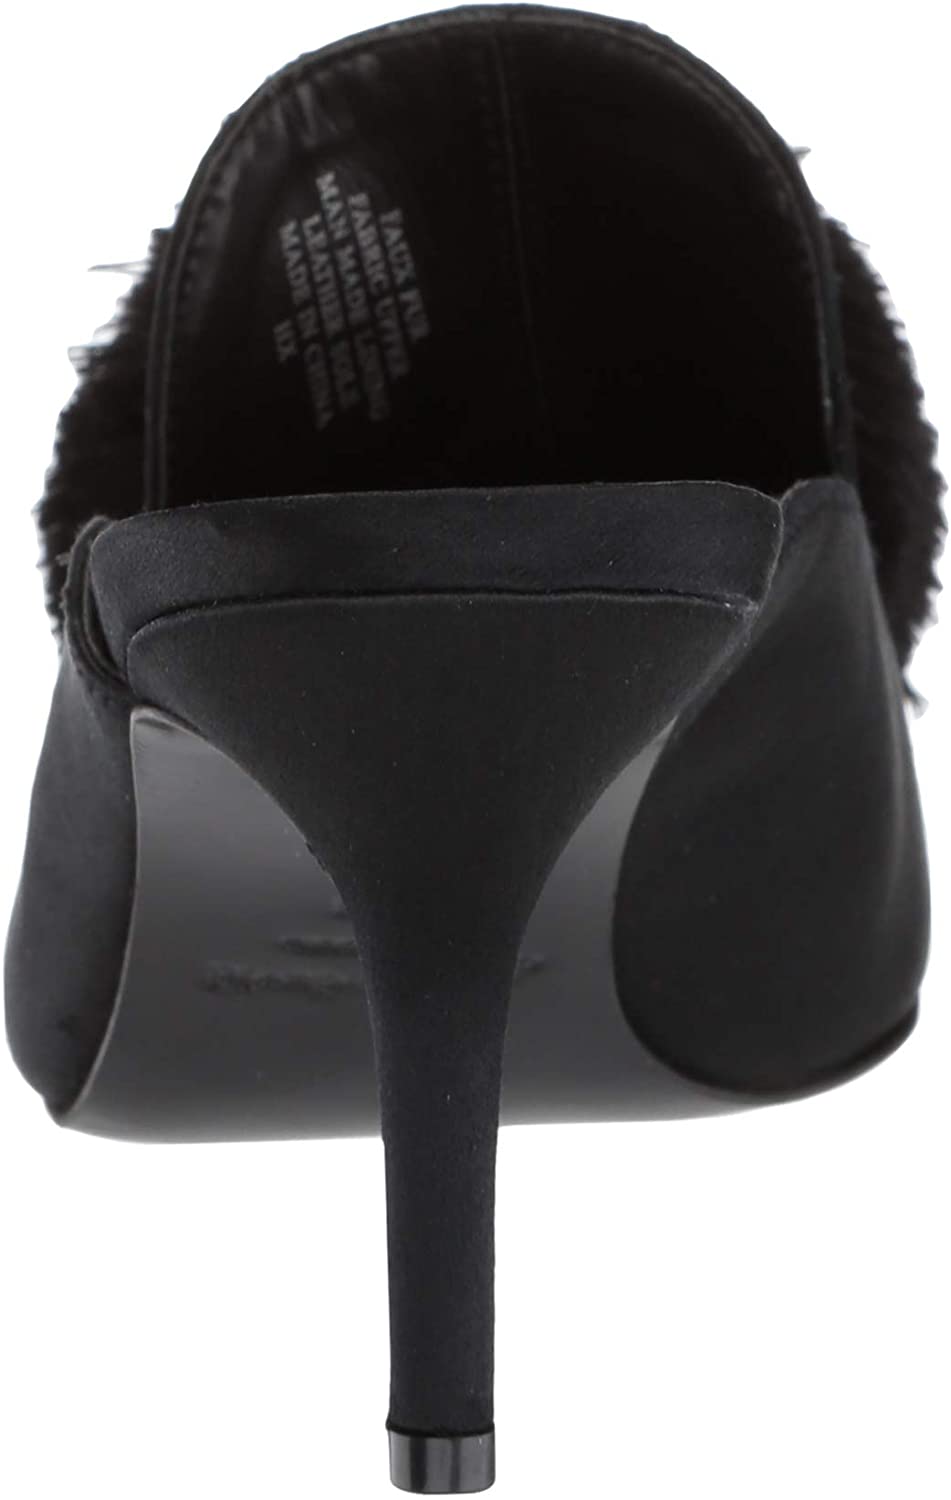 Charles David Adelle Women/Adult shoe size 7  Casual 2C18F001-BLACK Black - image 3 of 8